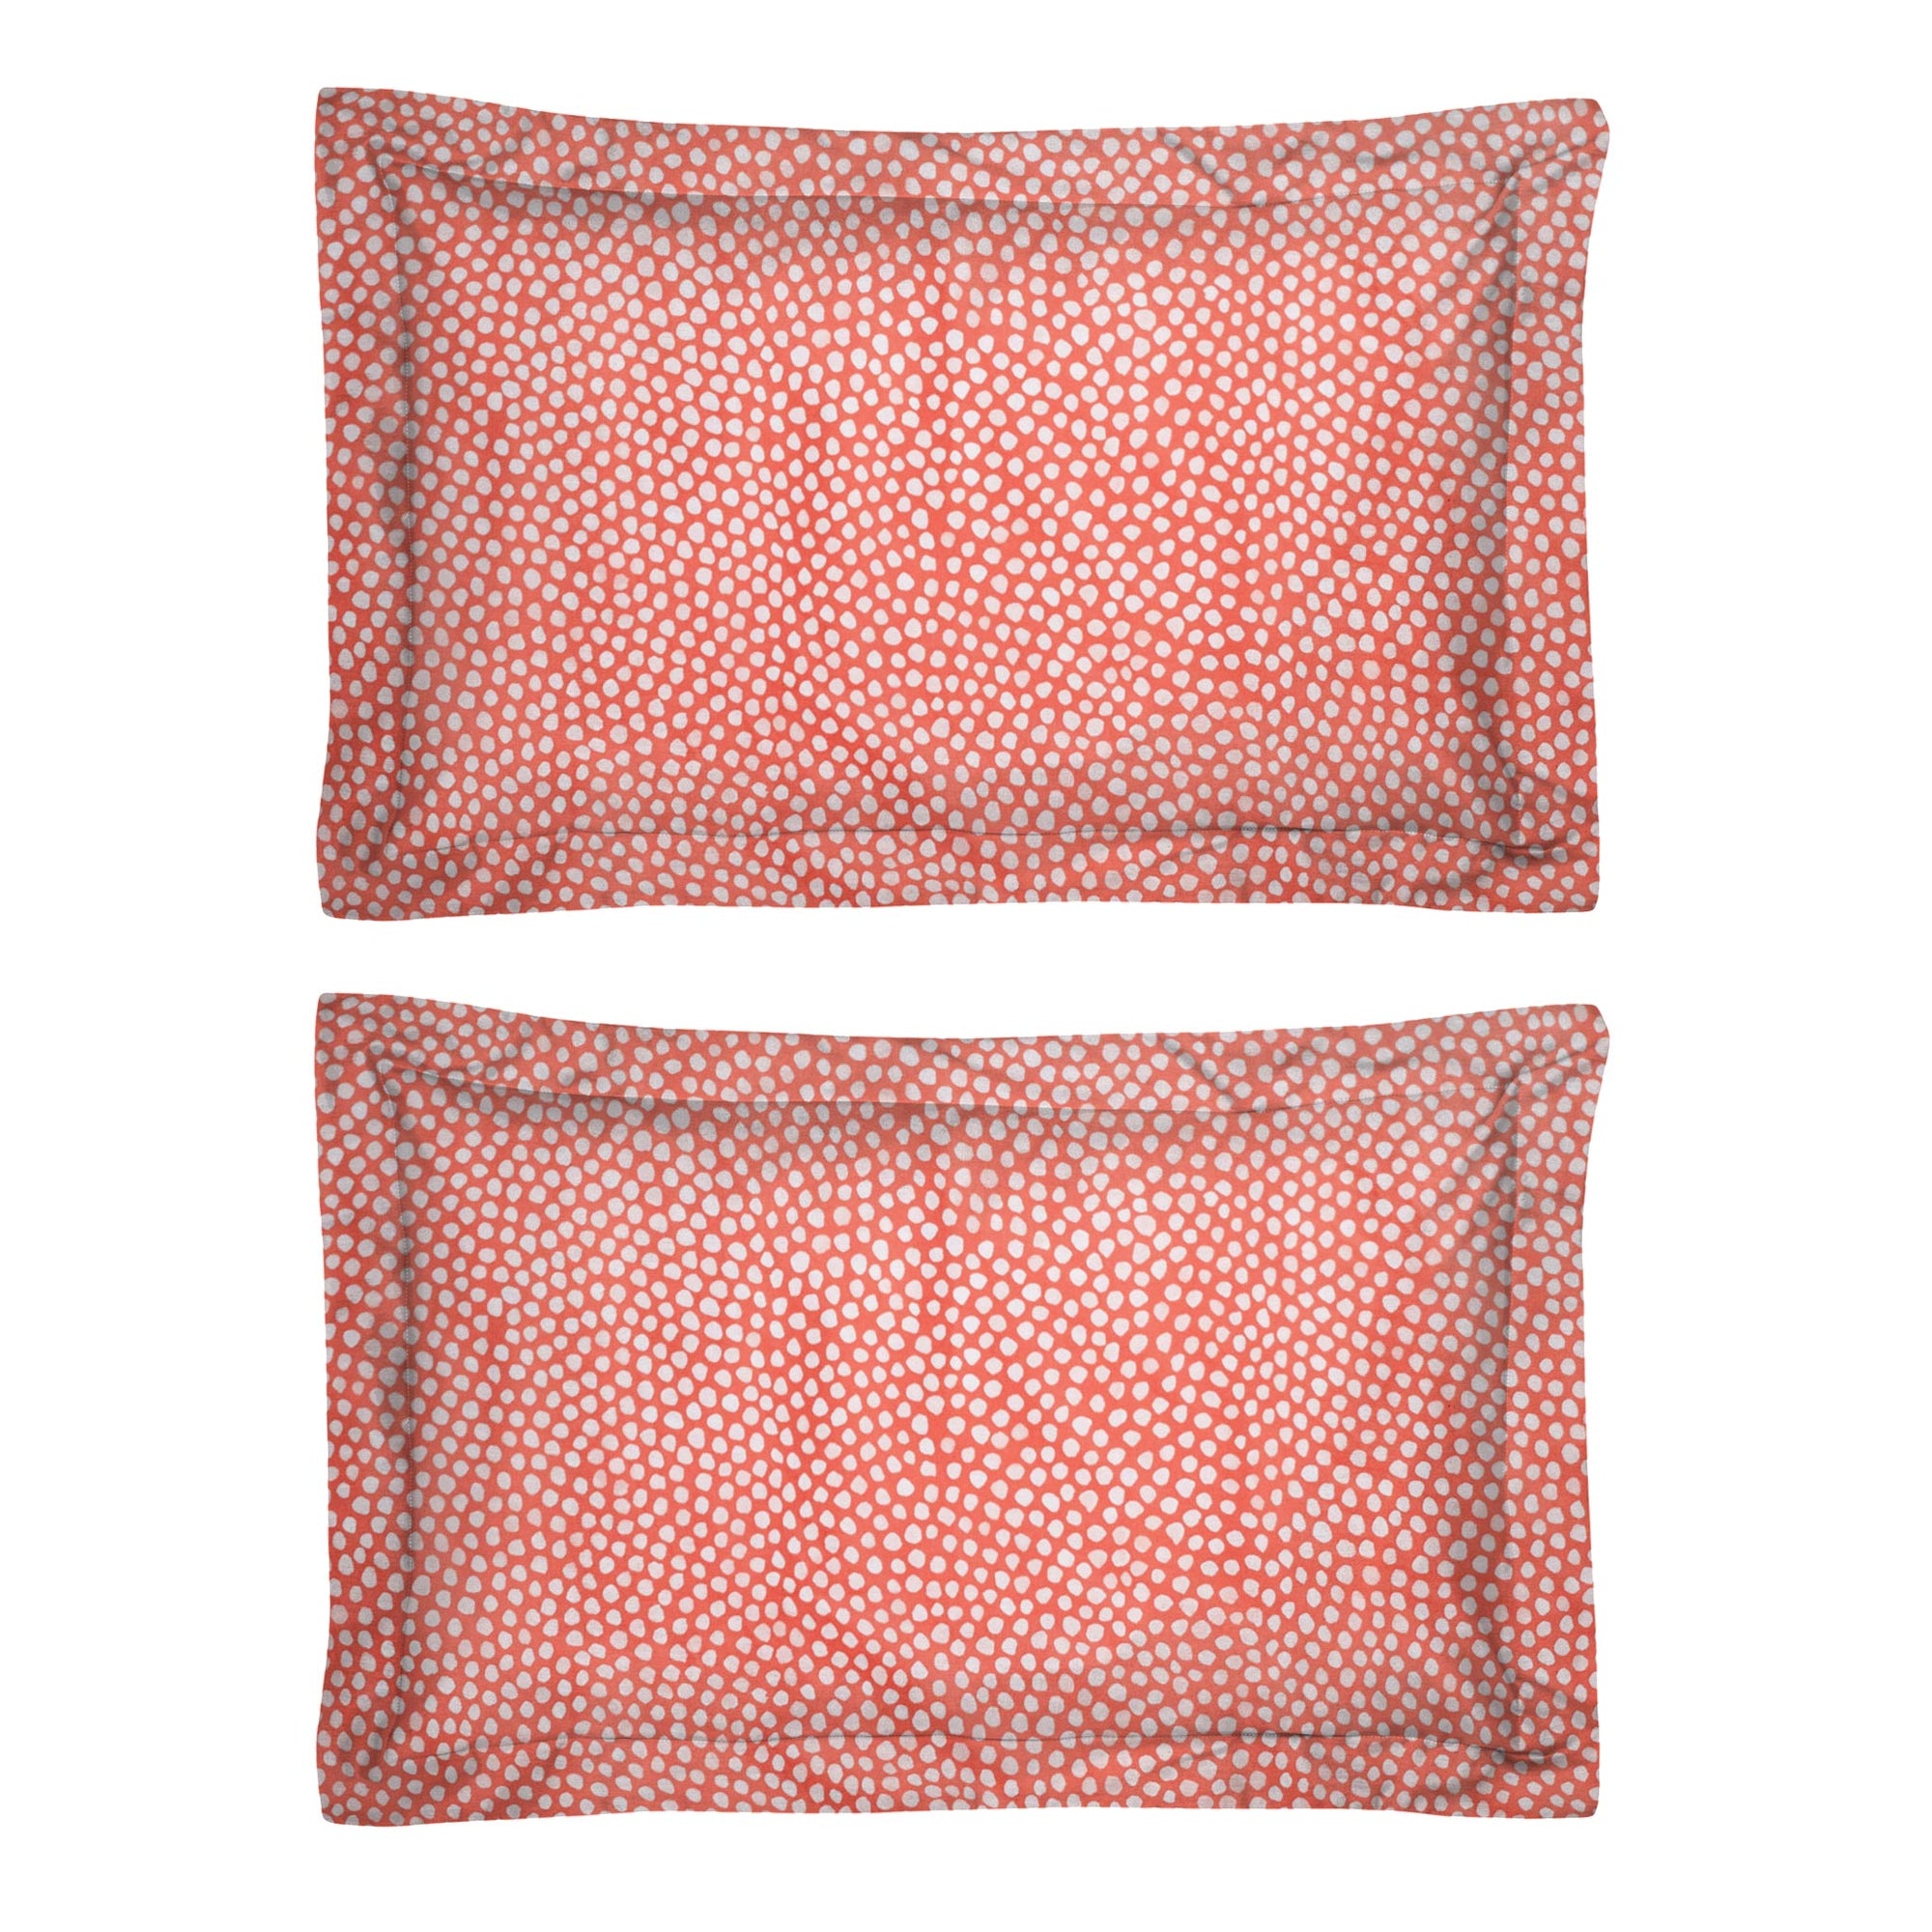 One Pair Pink Coral Polka Dot 100% Cotton Percale 200TC Oxford Pillowcase